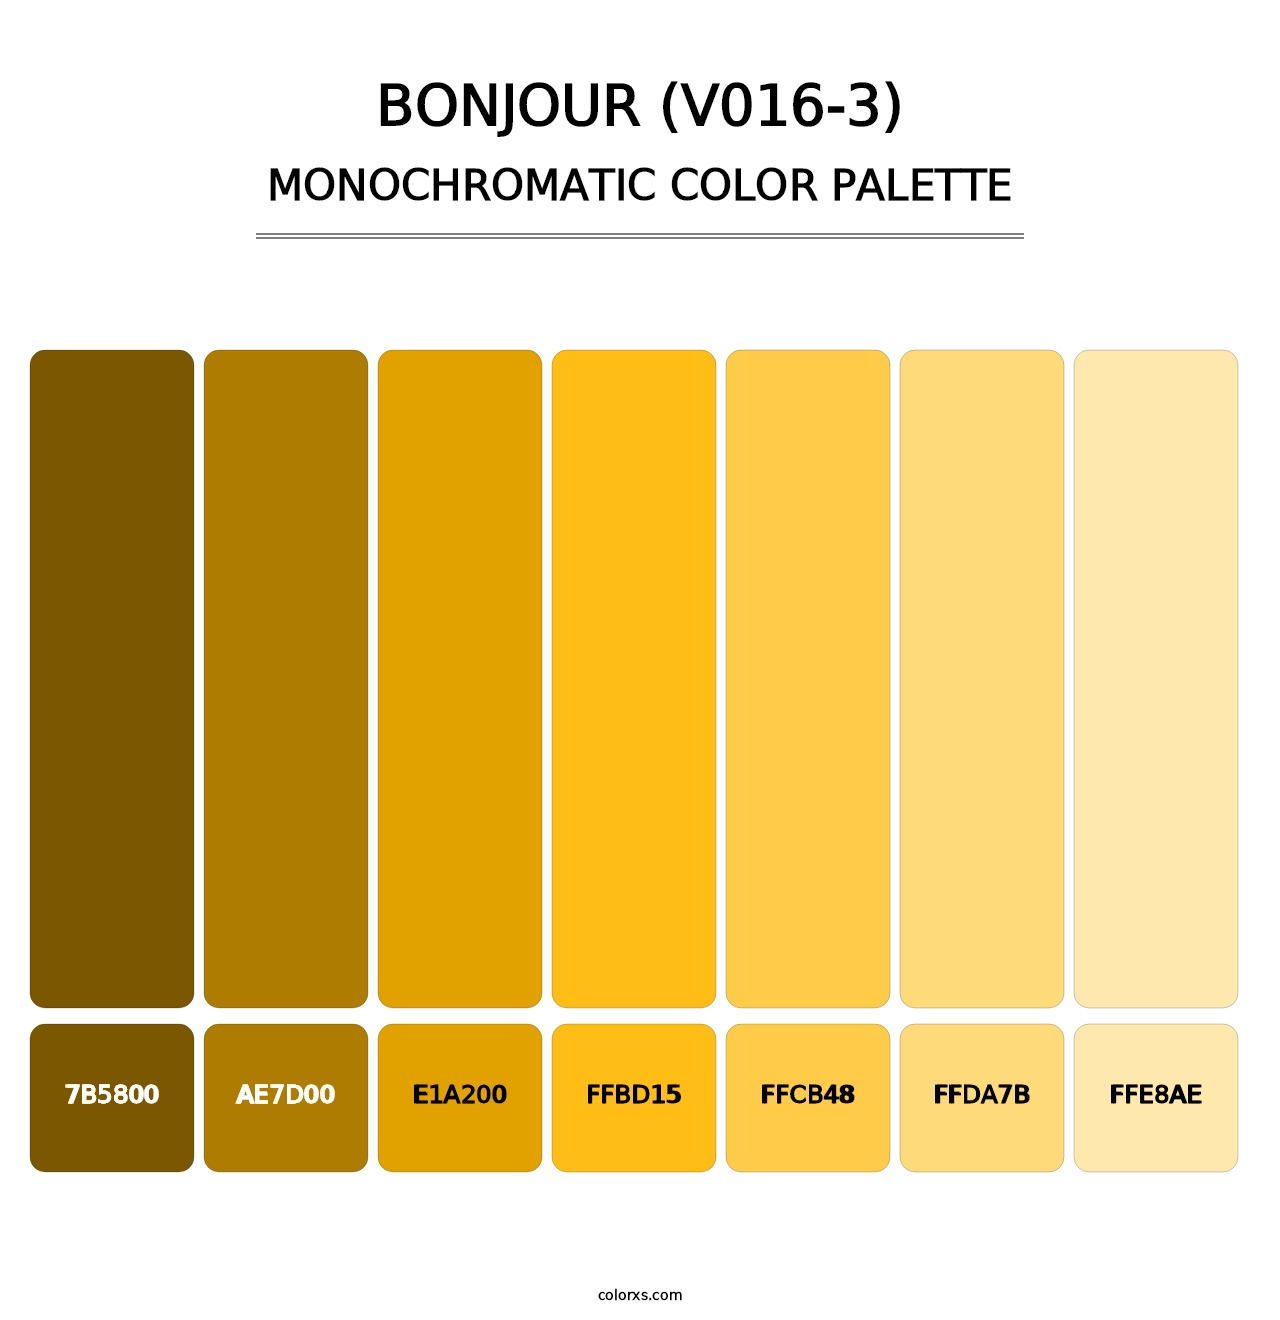 Bonjour (V016-3) - Monochromatic Color Palette